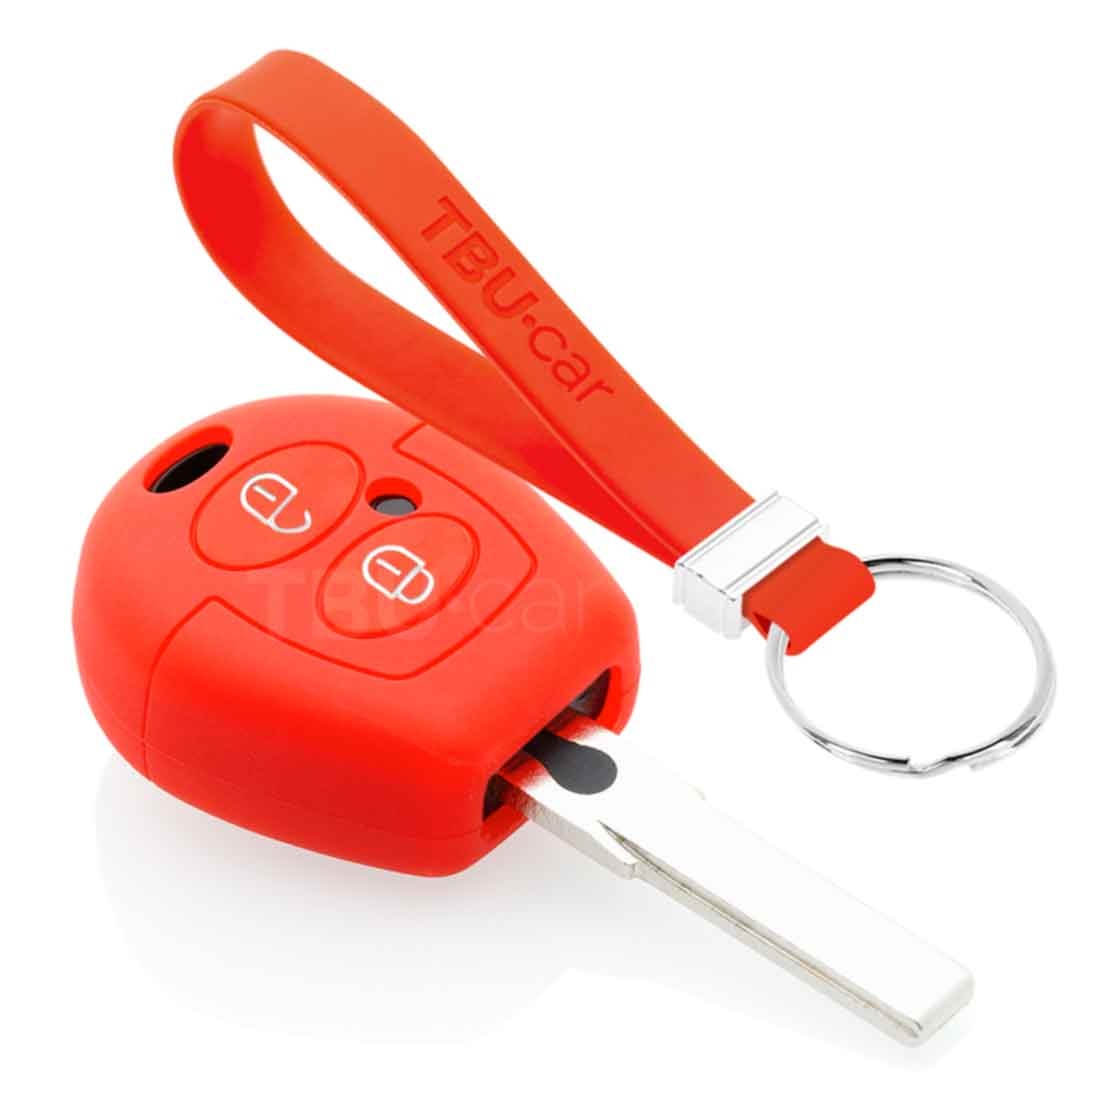 TBU car TBU car Autoschlüssel Hülle kompatibel mit Seat 2 Tasten - Schutzhülle aus Silikon - Auto Schlüsselhülle Cover in Rot